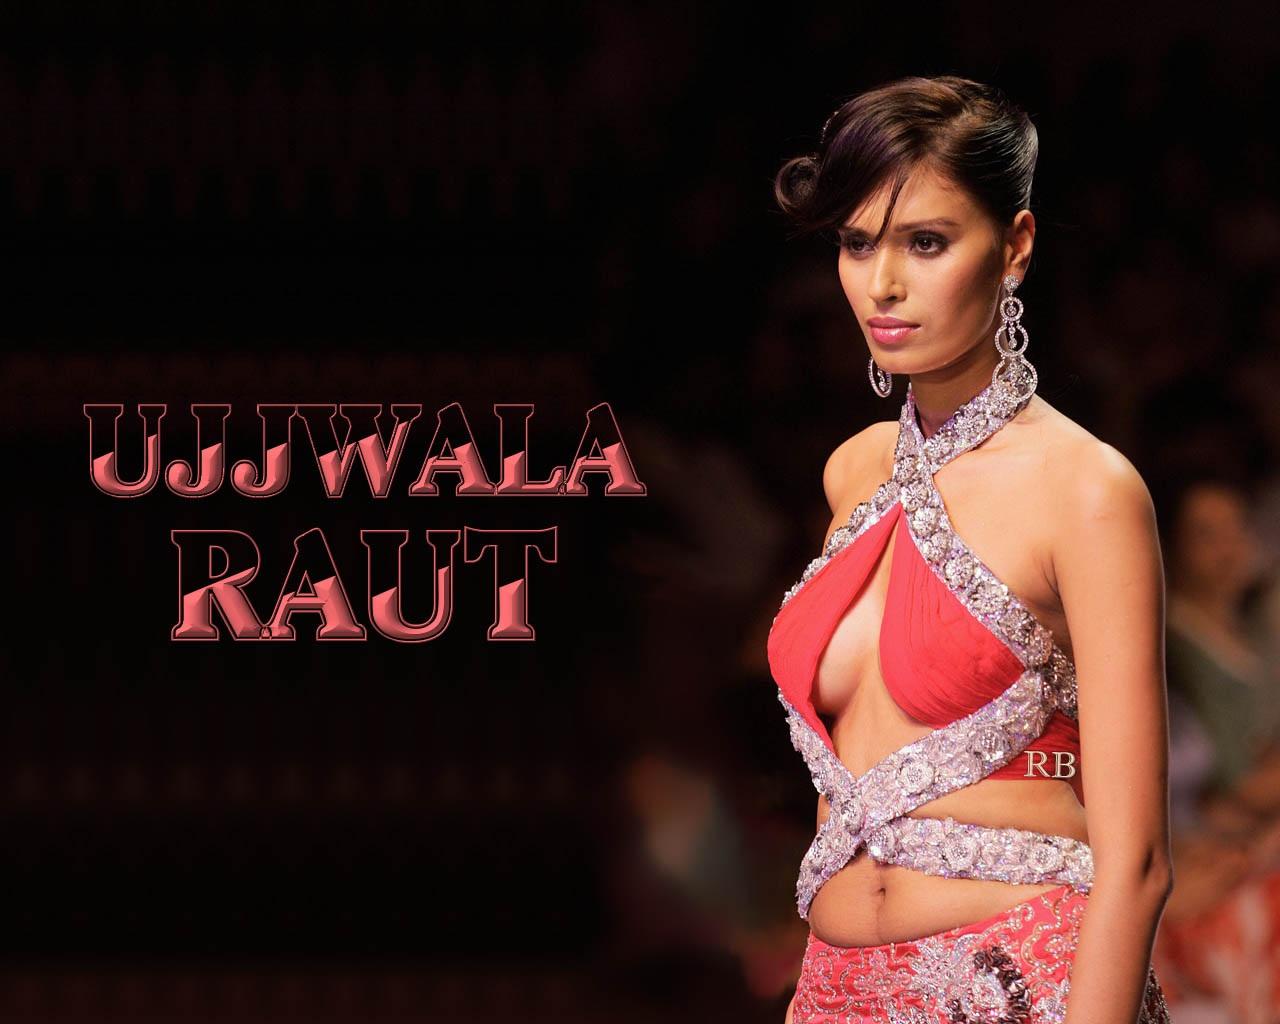 Ujjwala Raut model hot image